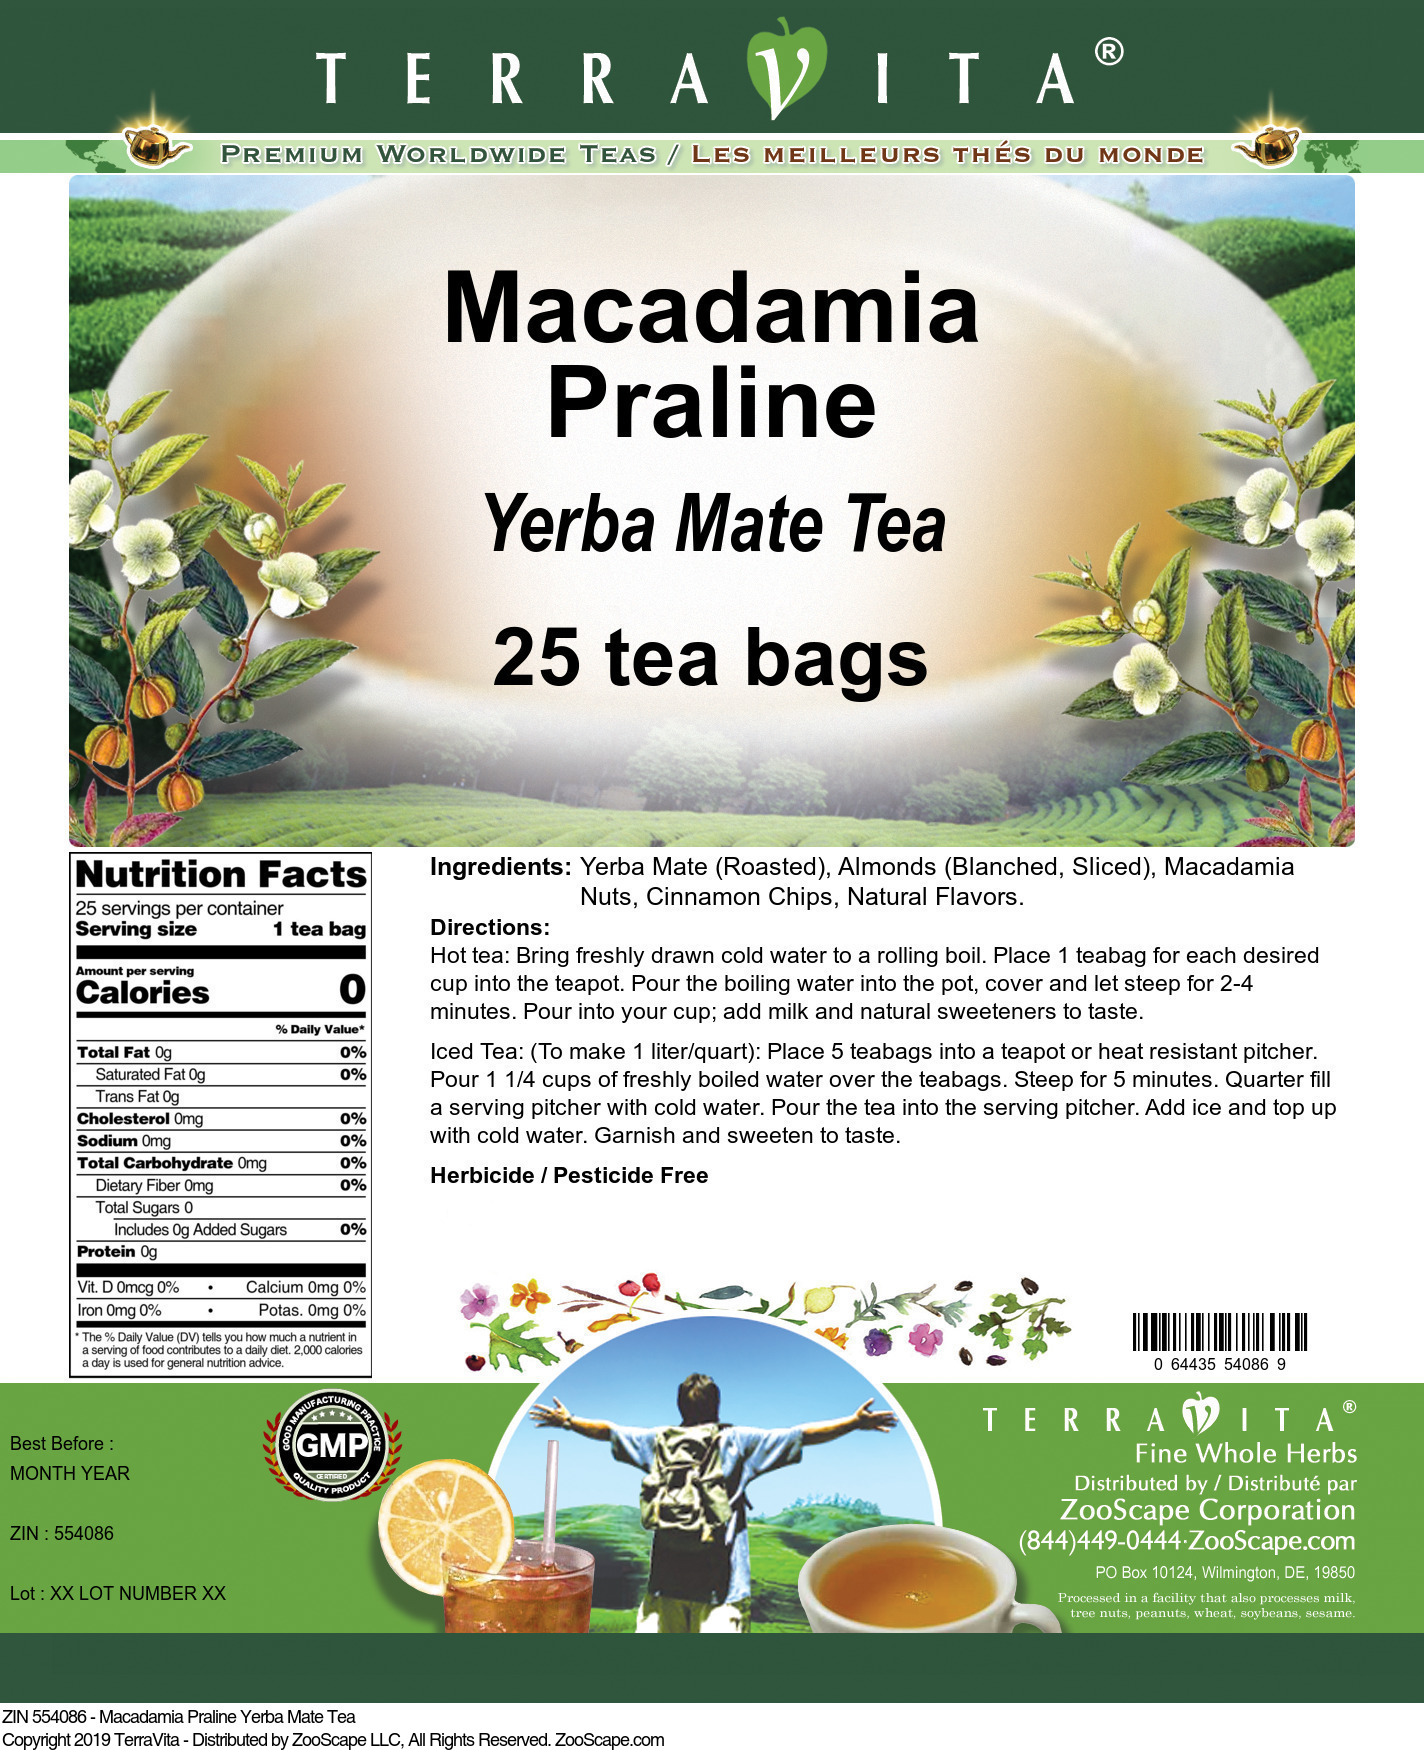 Macadamia Praline Yerba Mate Tea - Label